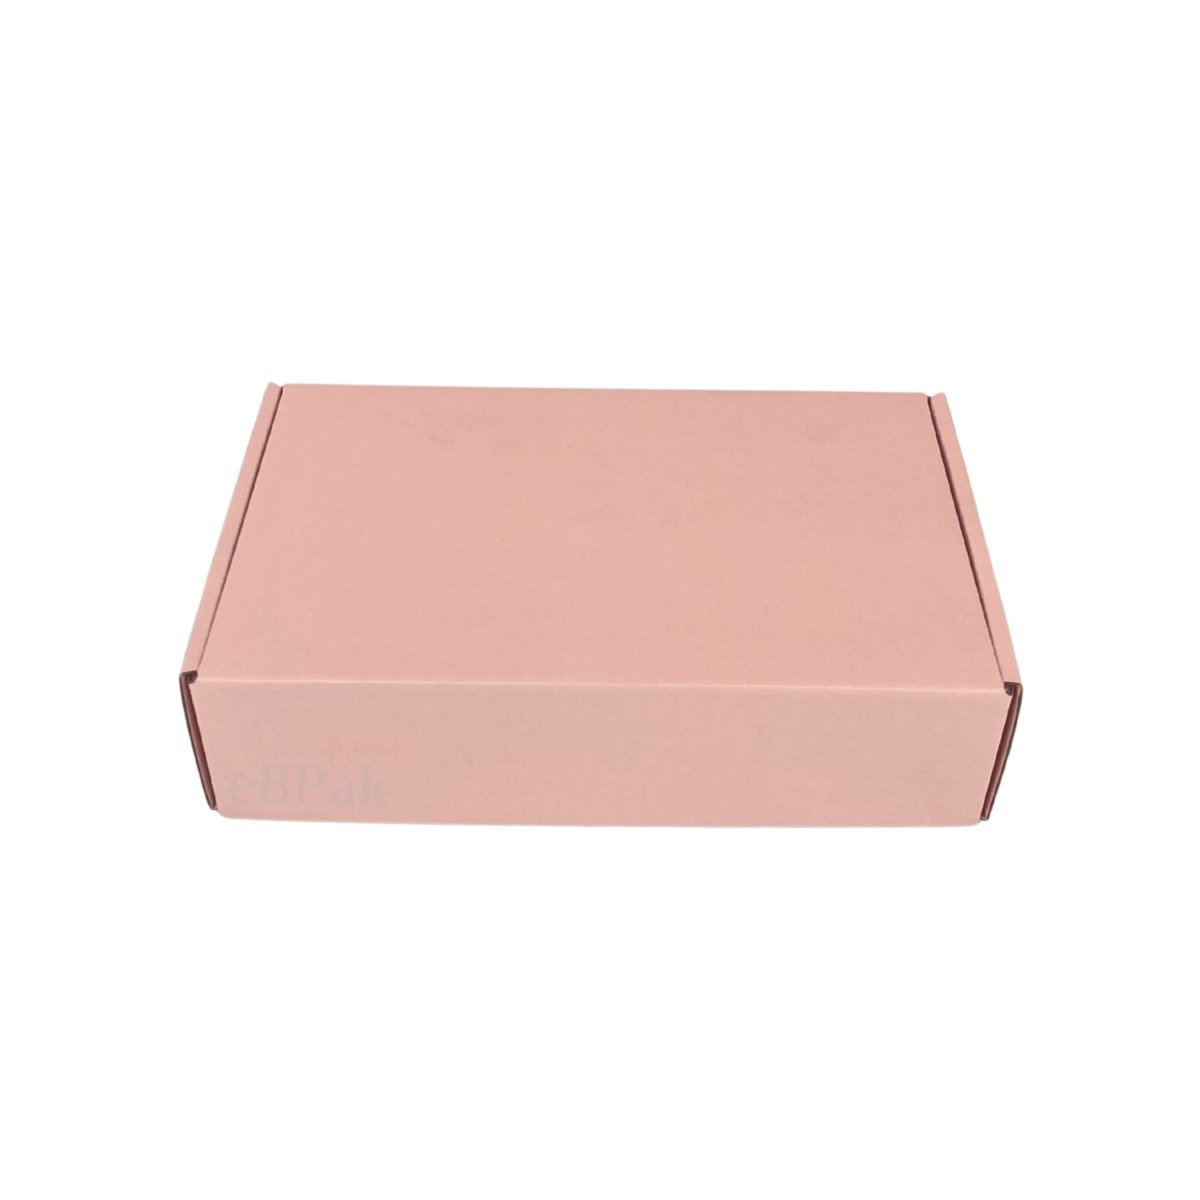 240 x 150 x 60mm Premium Full Rose Pink Mailing Box